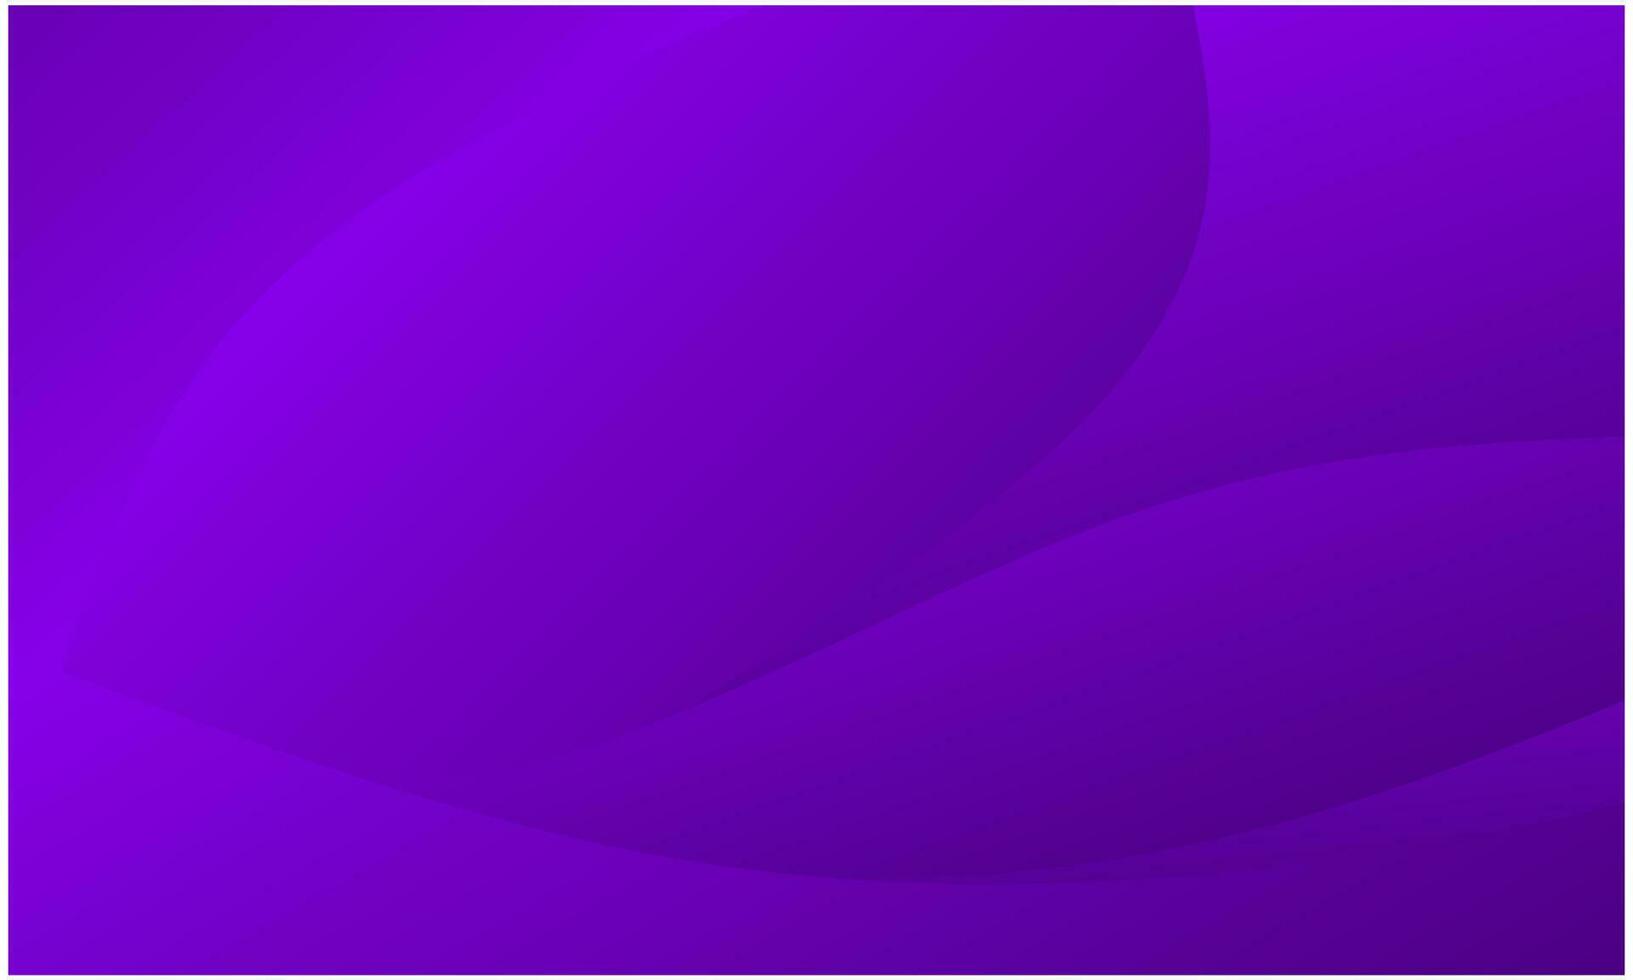 púrpura resumen ola antecedentes para presentaciones, carteles, desolladores, pancartas etc vector